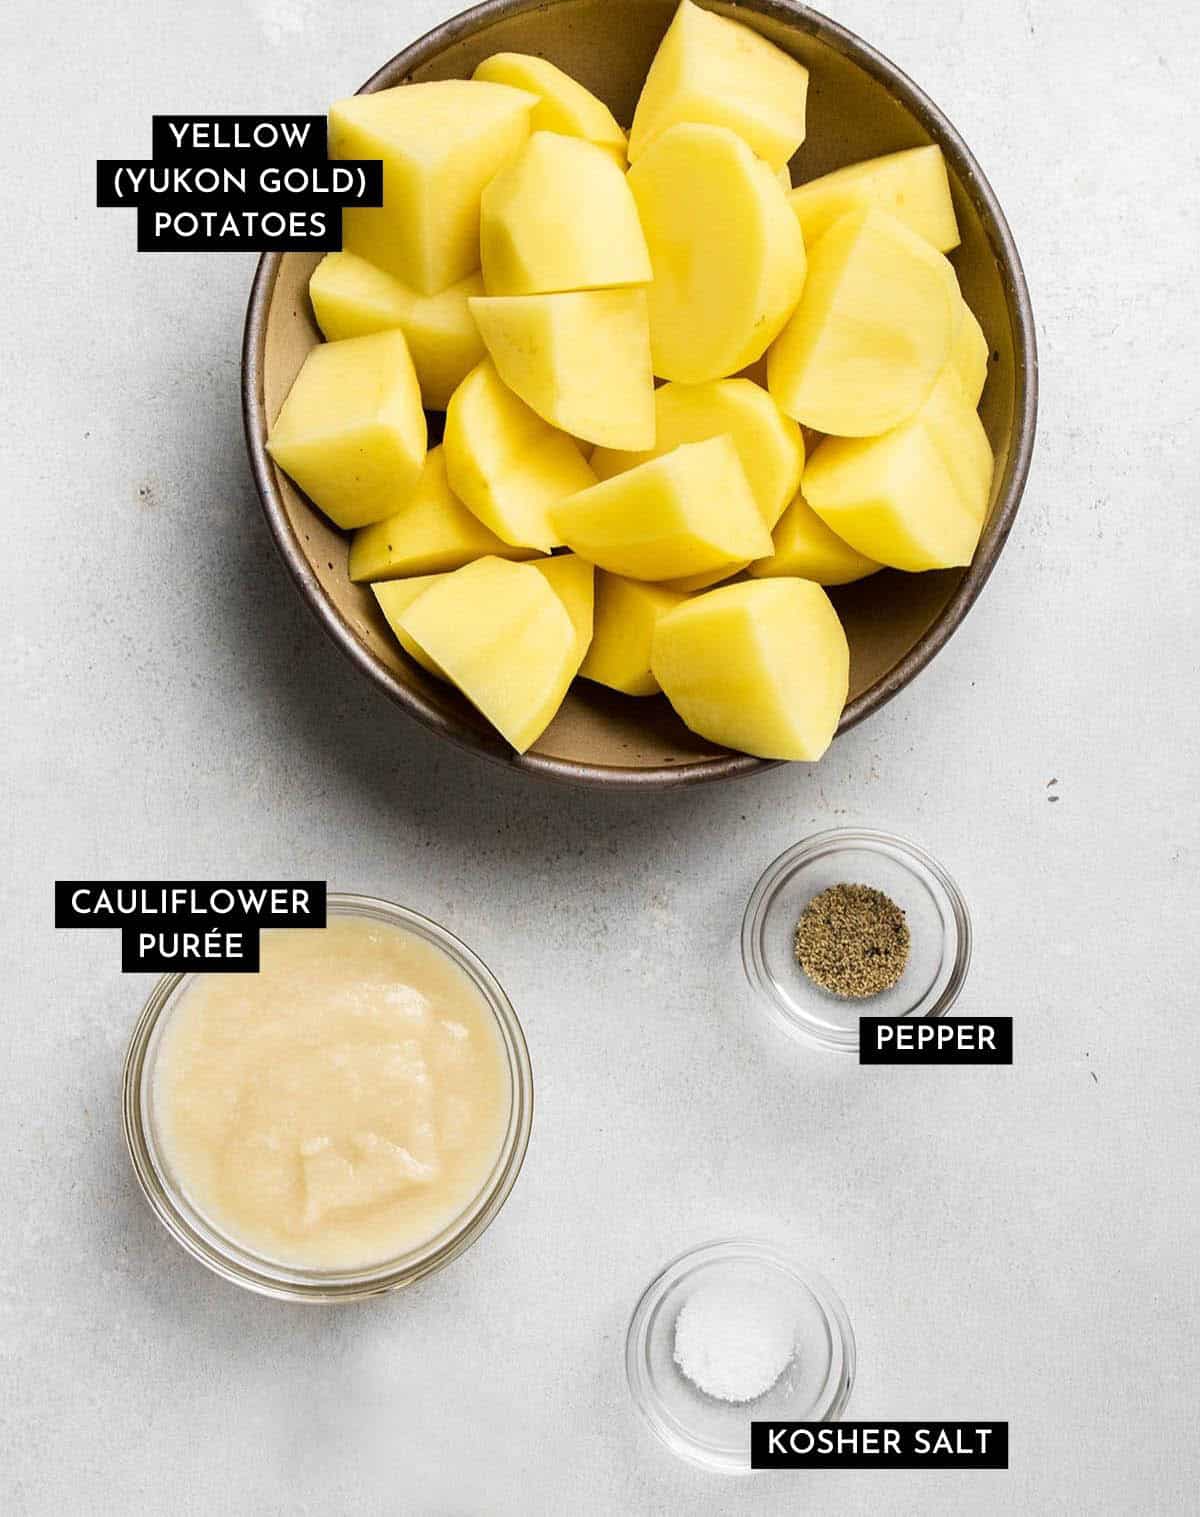 Potatoes and cauliflower cream measured into bowls.